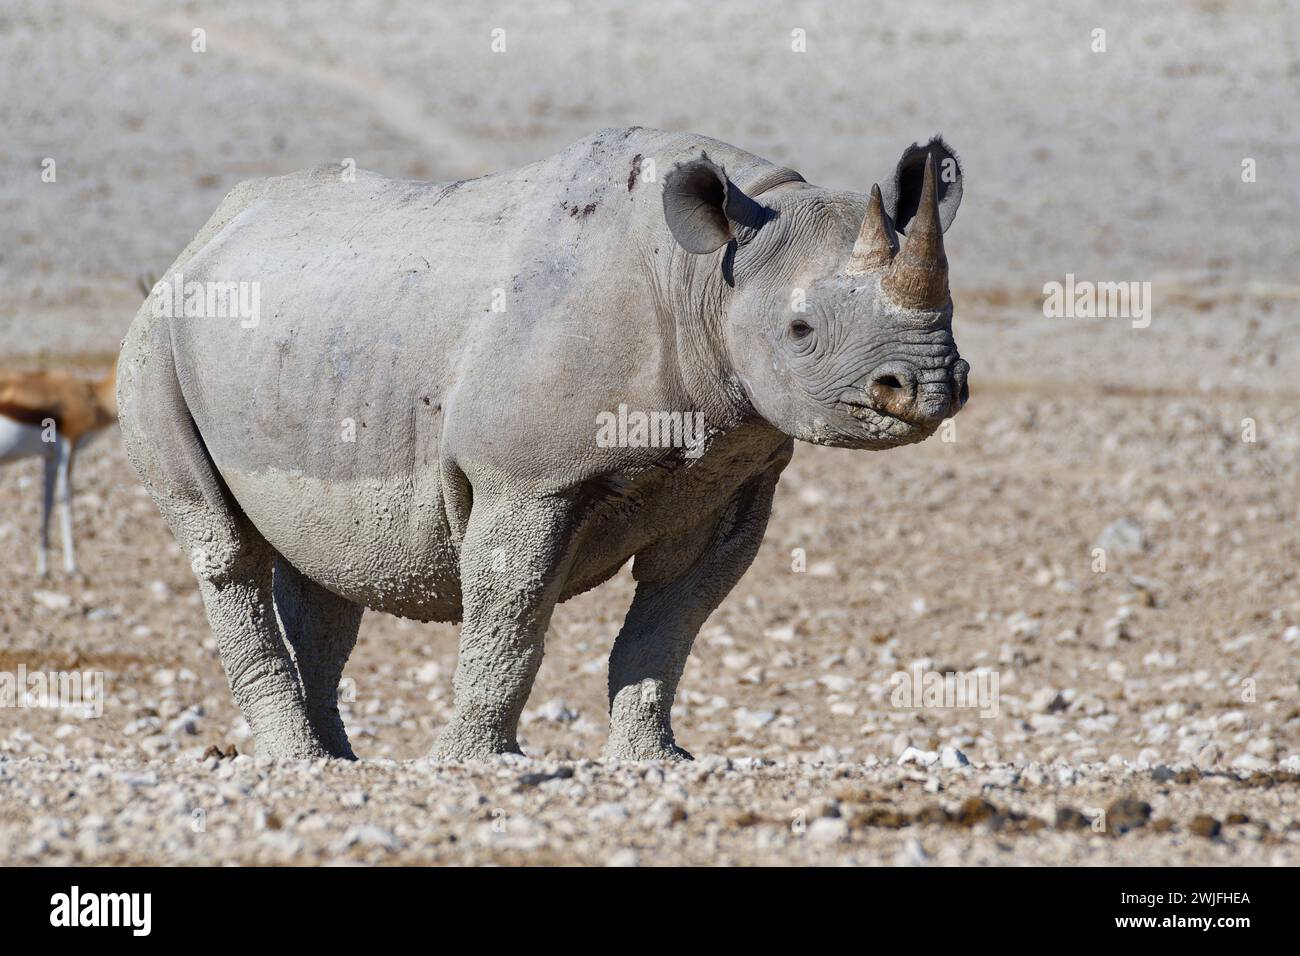 Black rhinoceros (Diceros bicornis), adult female covered in wet mud, standing near the waterhole, alert, Etosha National Park, Namibia, Africa Stock Photo